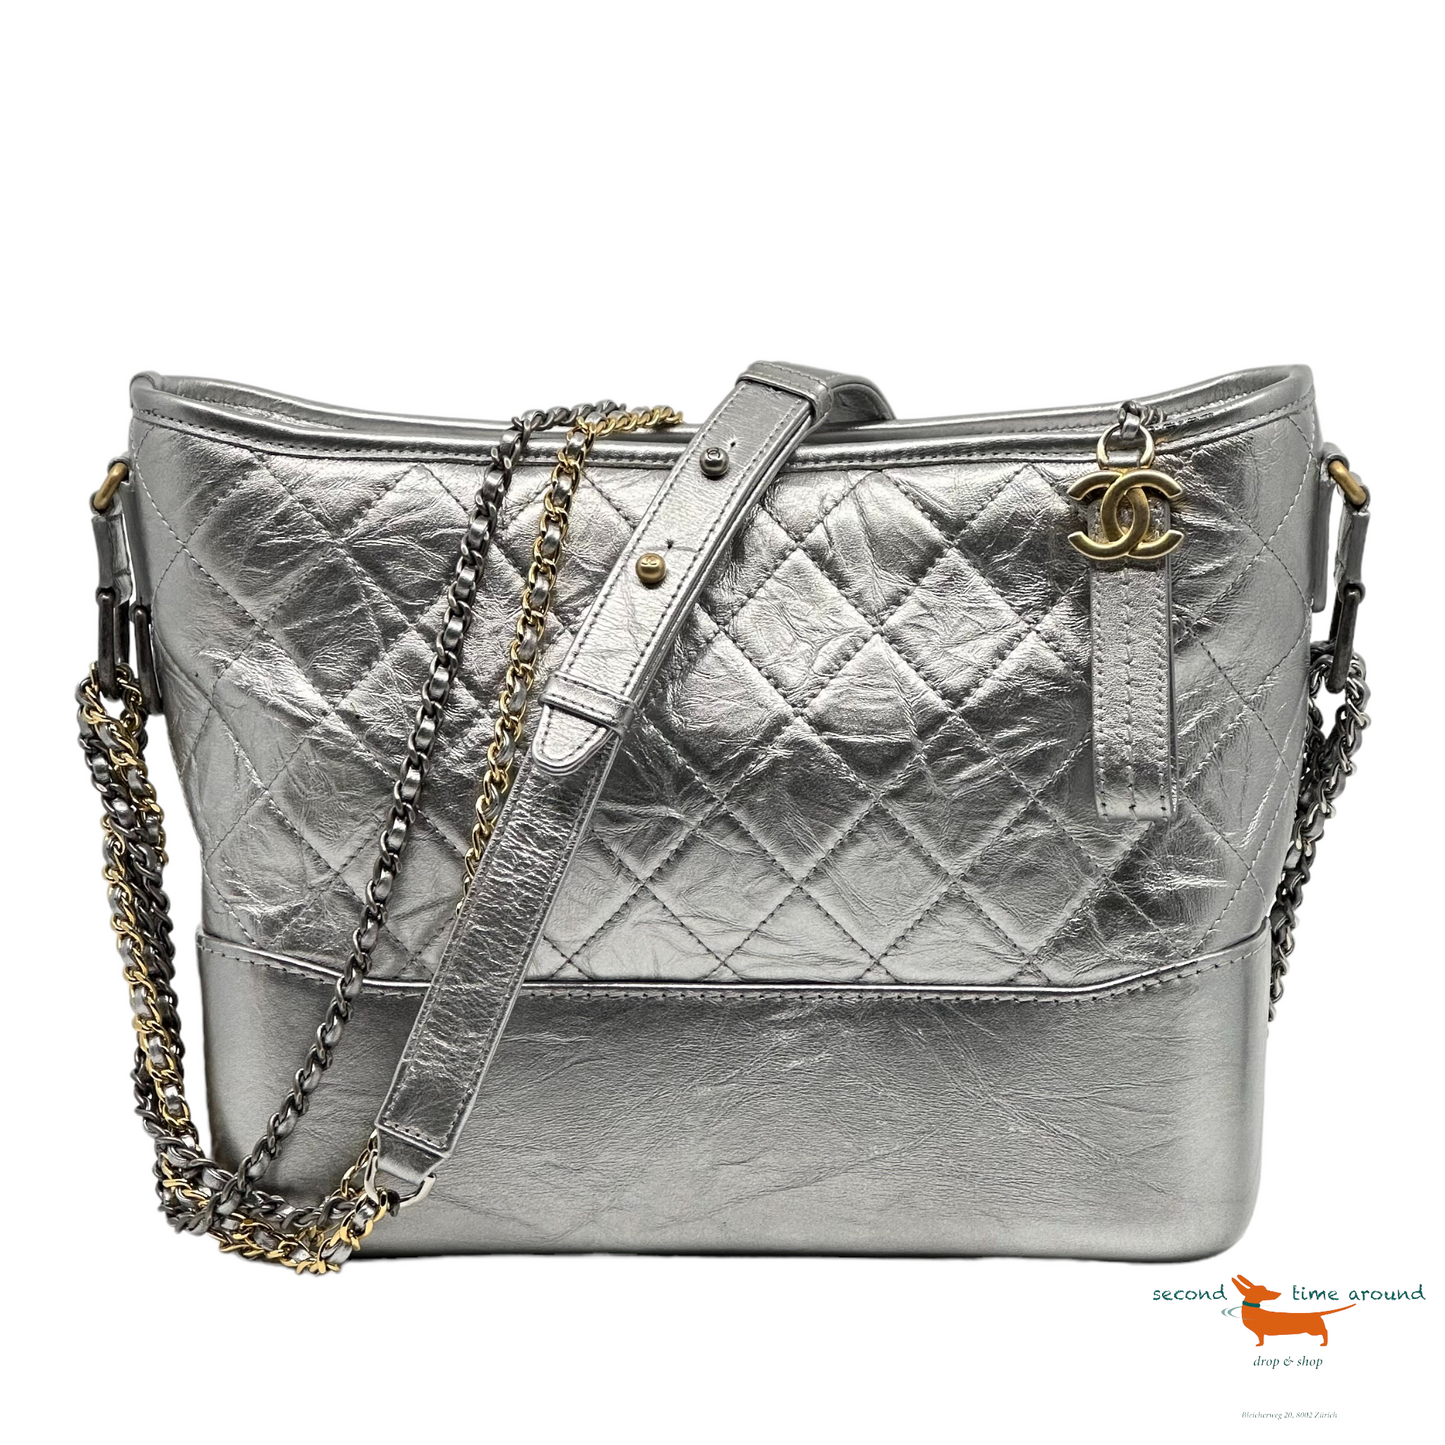 Chanel Gabrielle Hobo 2018 Bag Diamond Gabrielle Quilted Aged Medium Metallic Silver